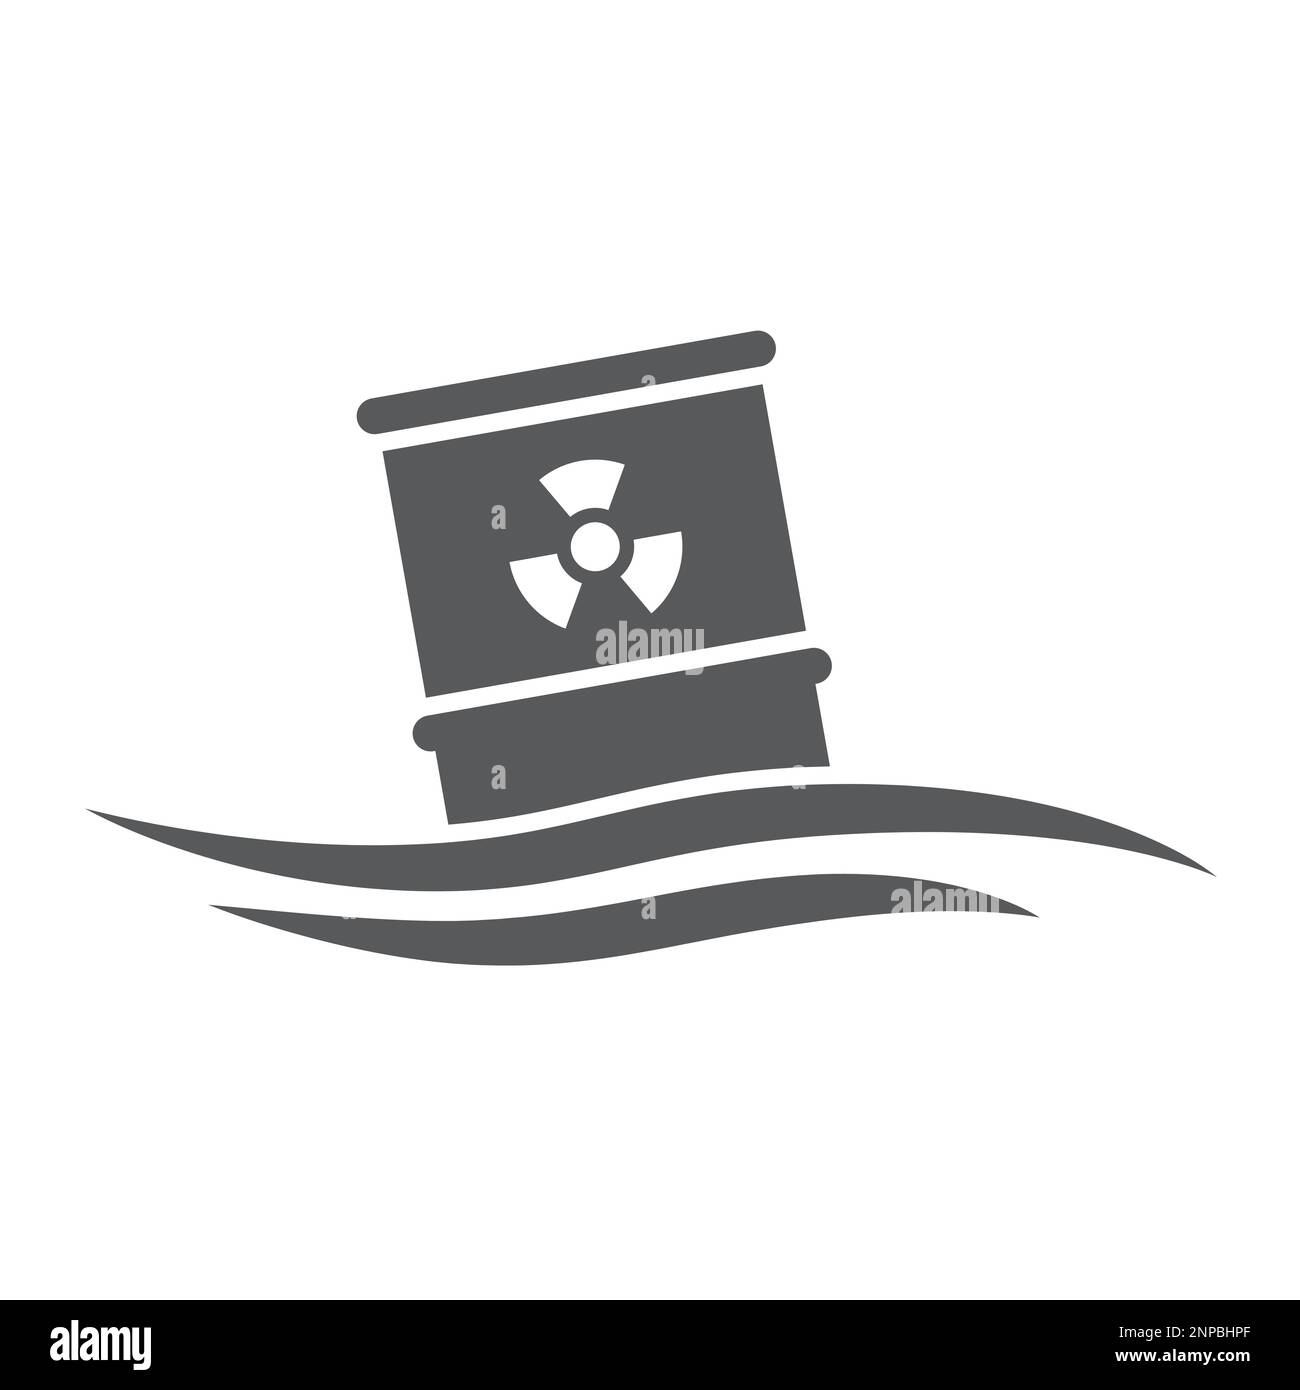 radioactive barrel in water silhouette vector icon Stock Vector